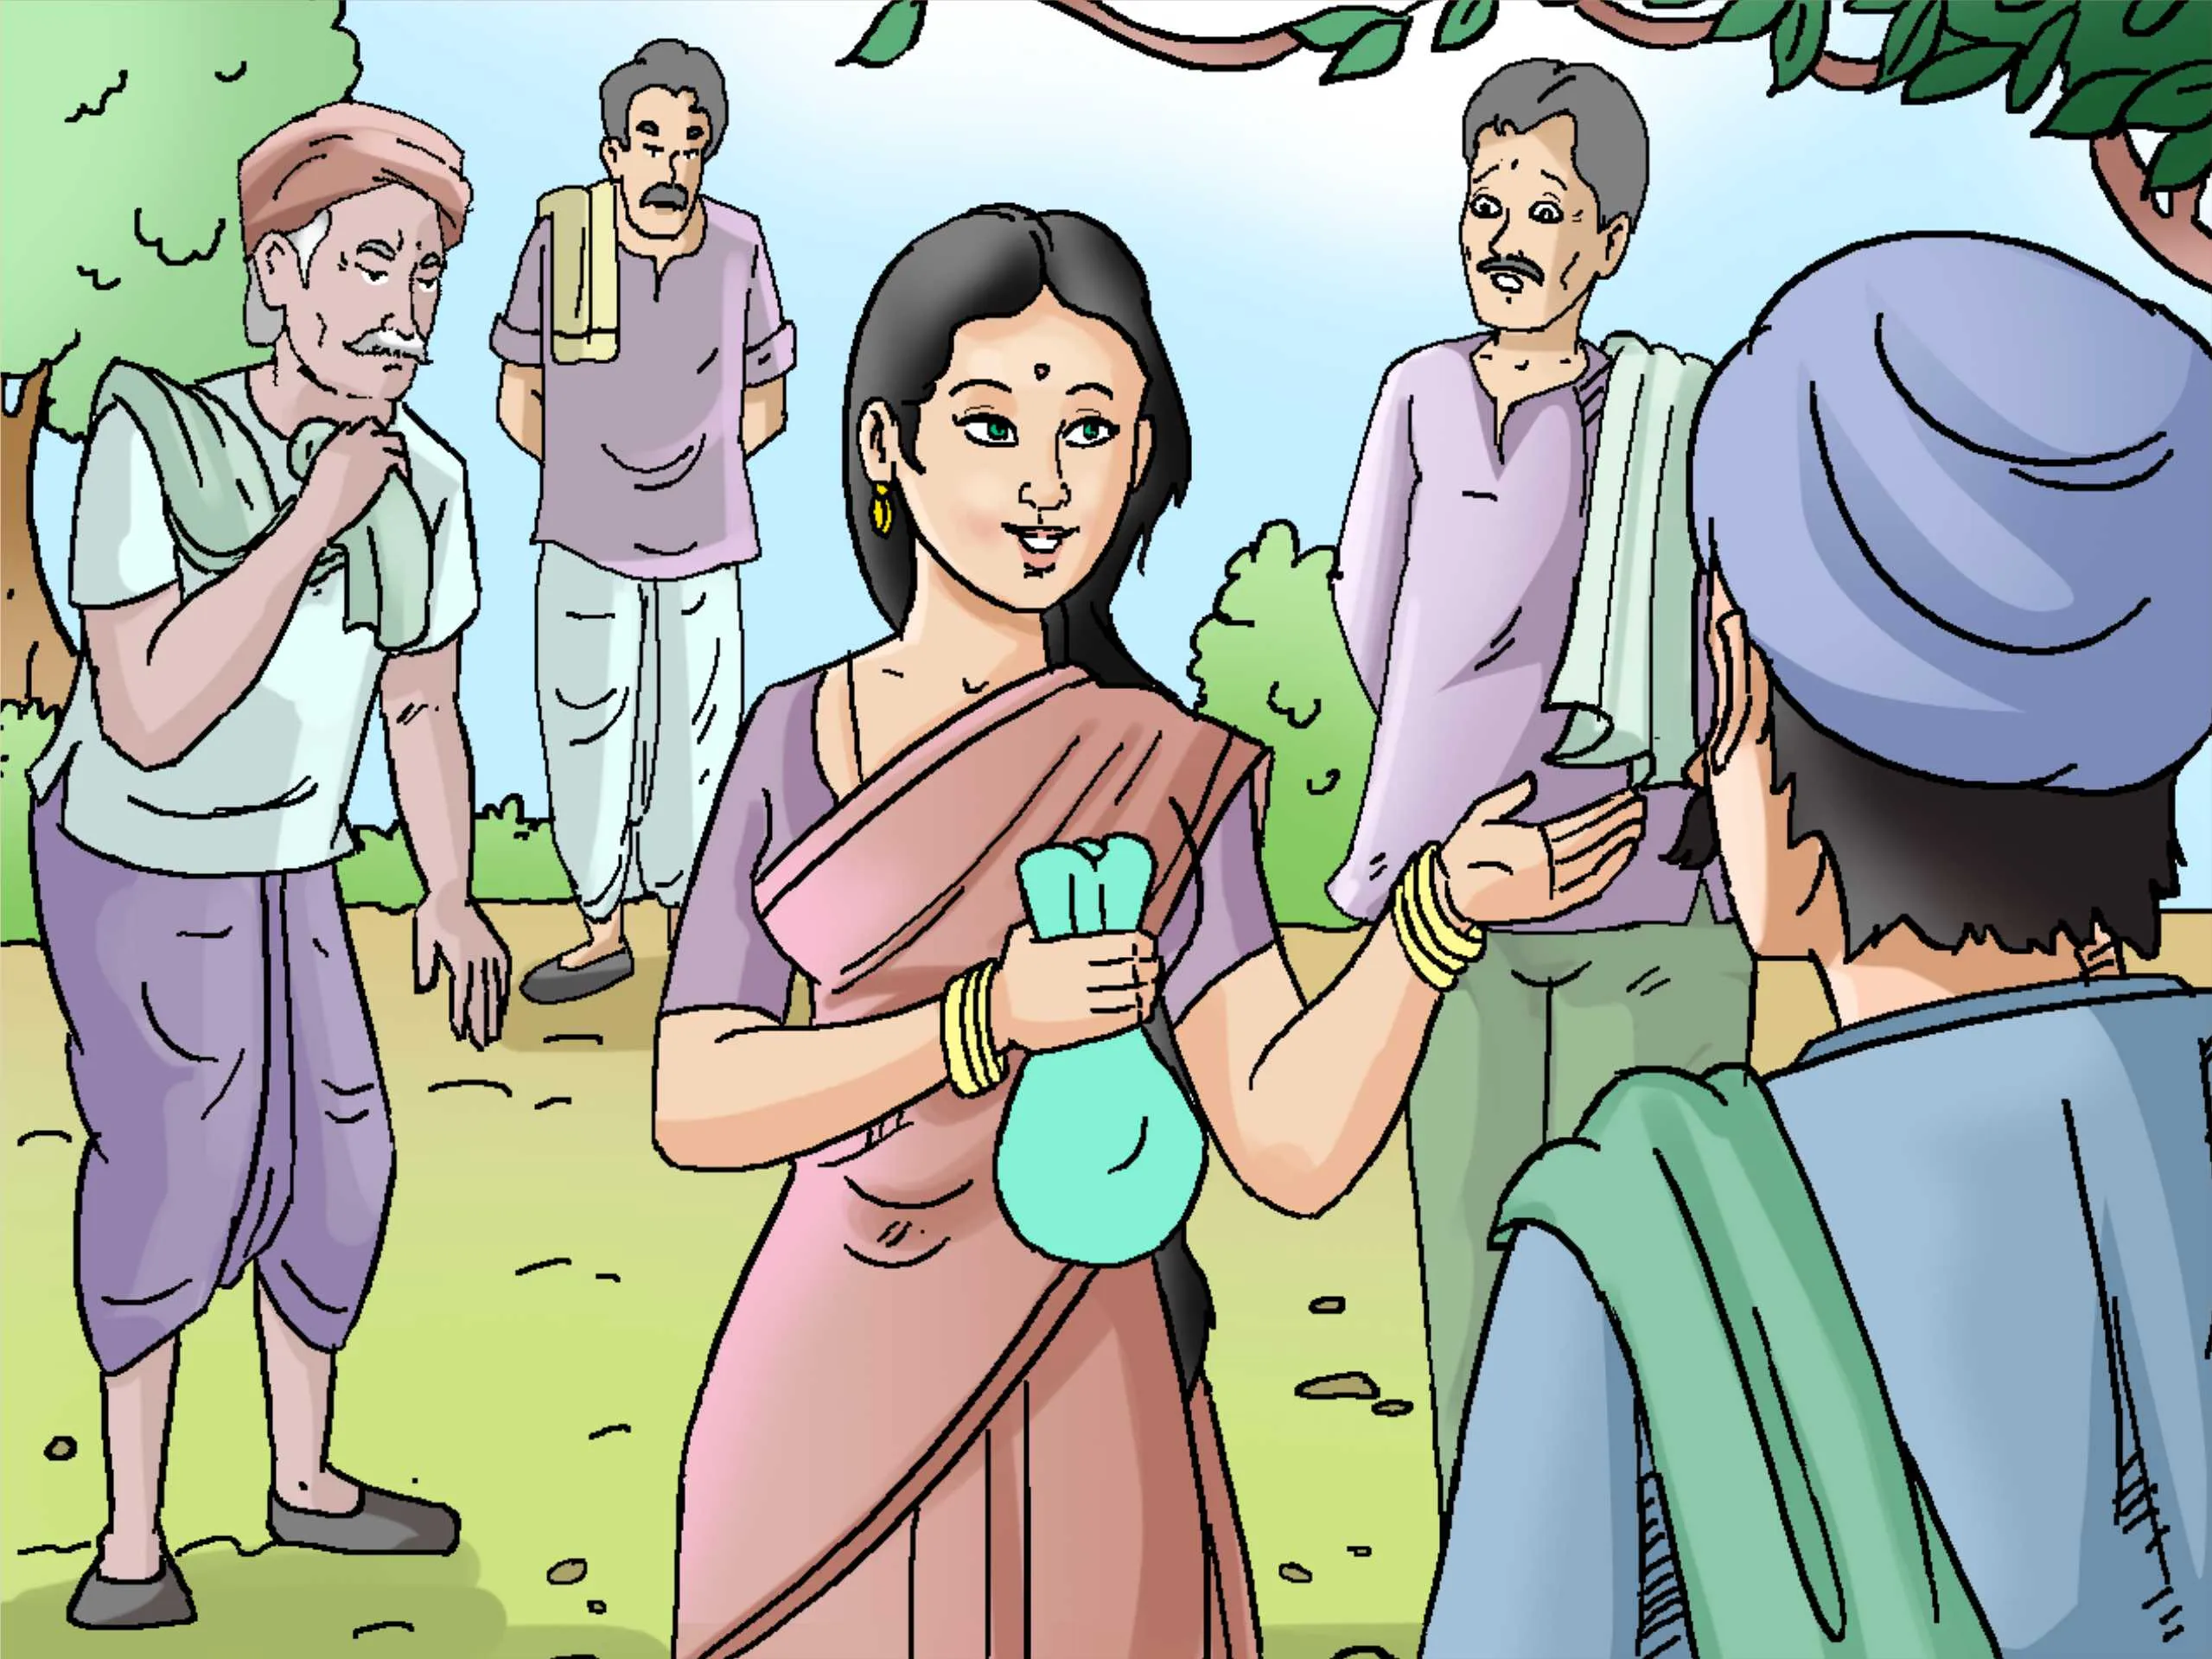 Woman in panchayat cartoon image